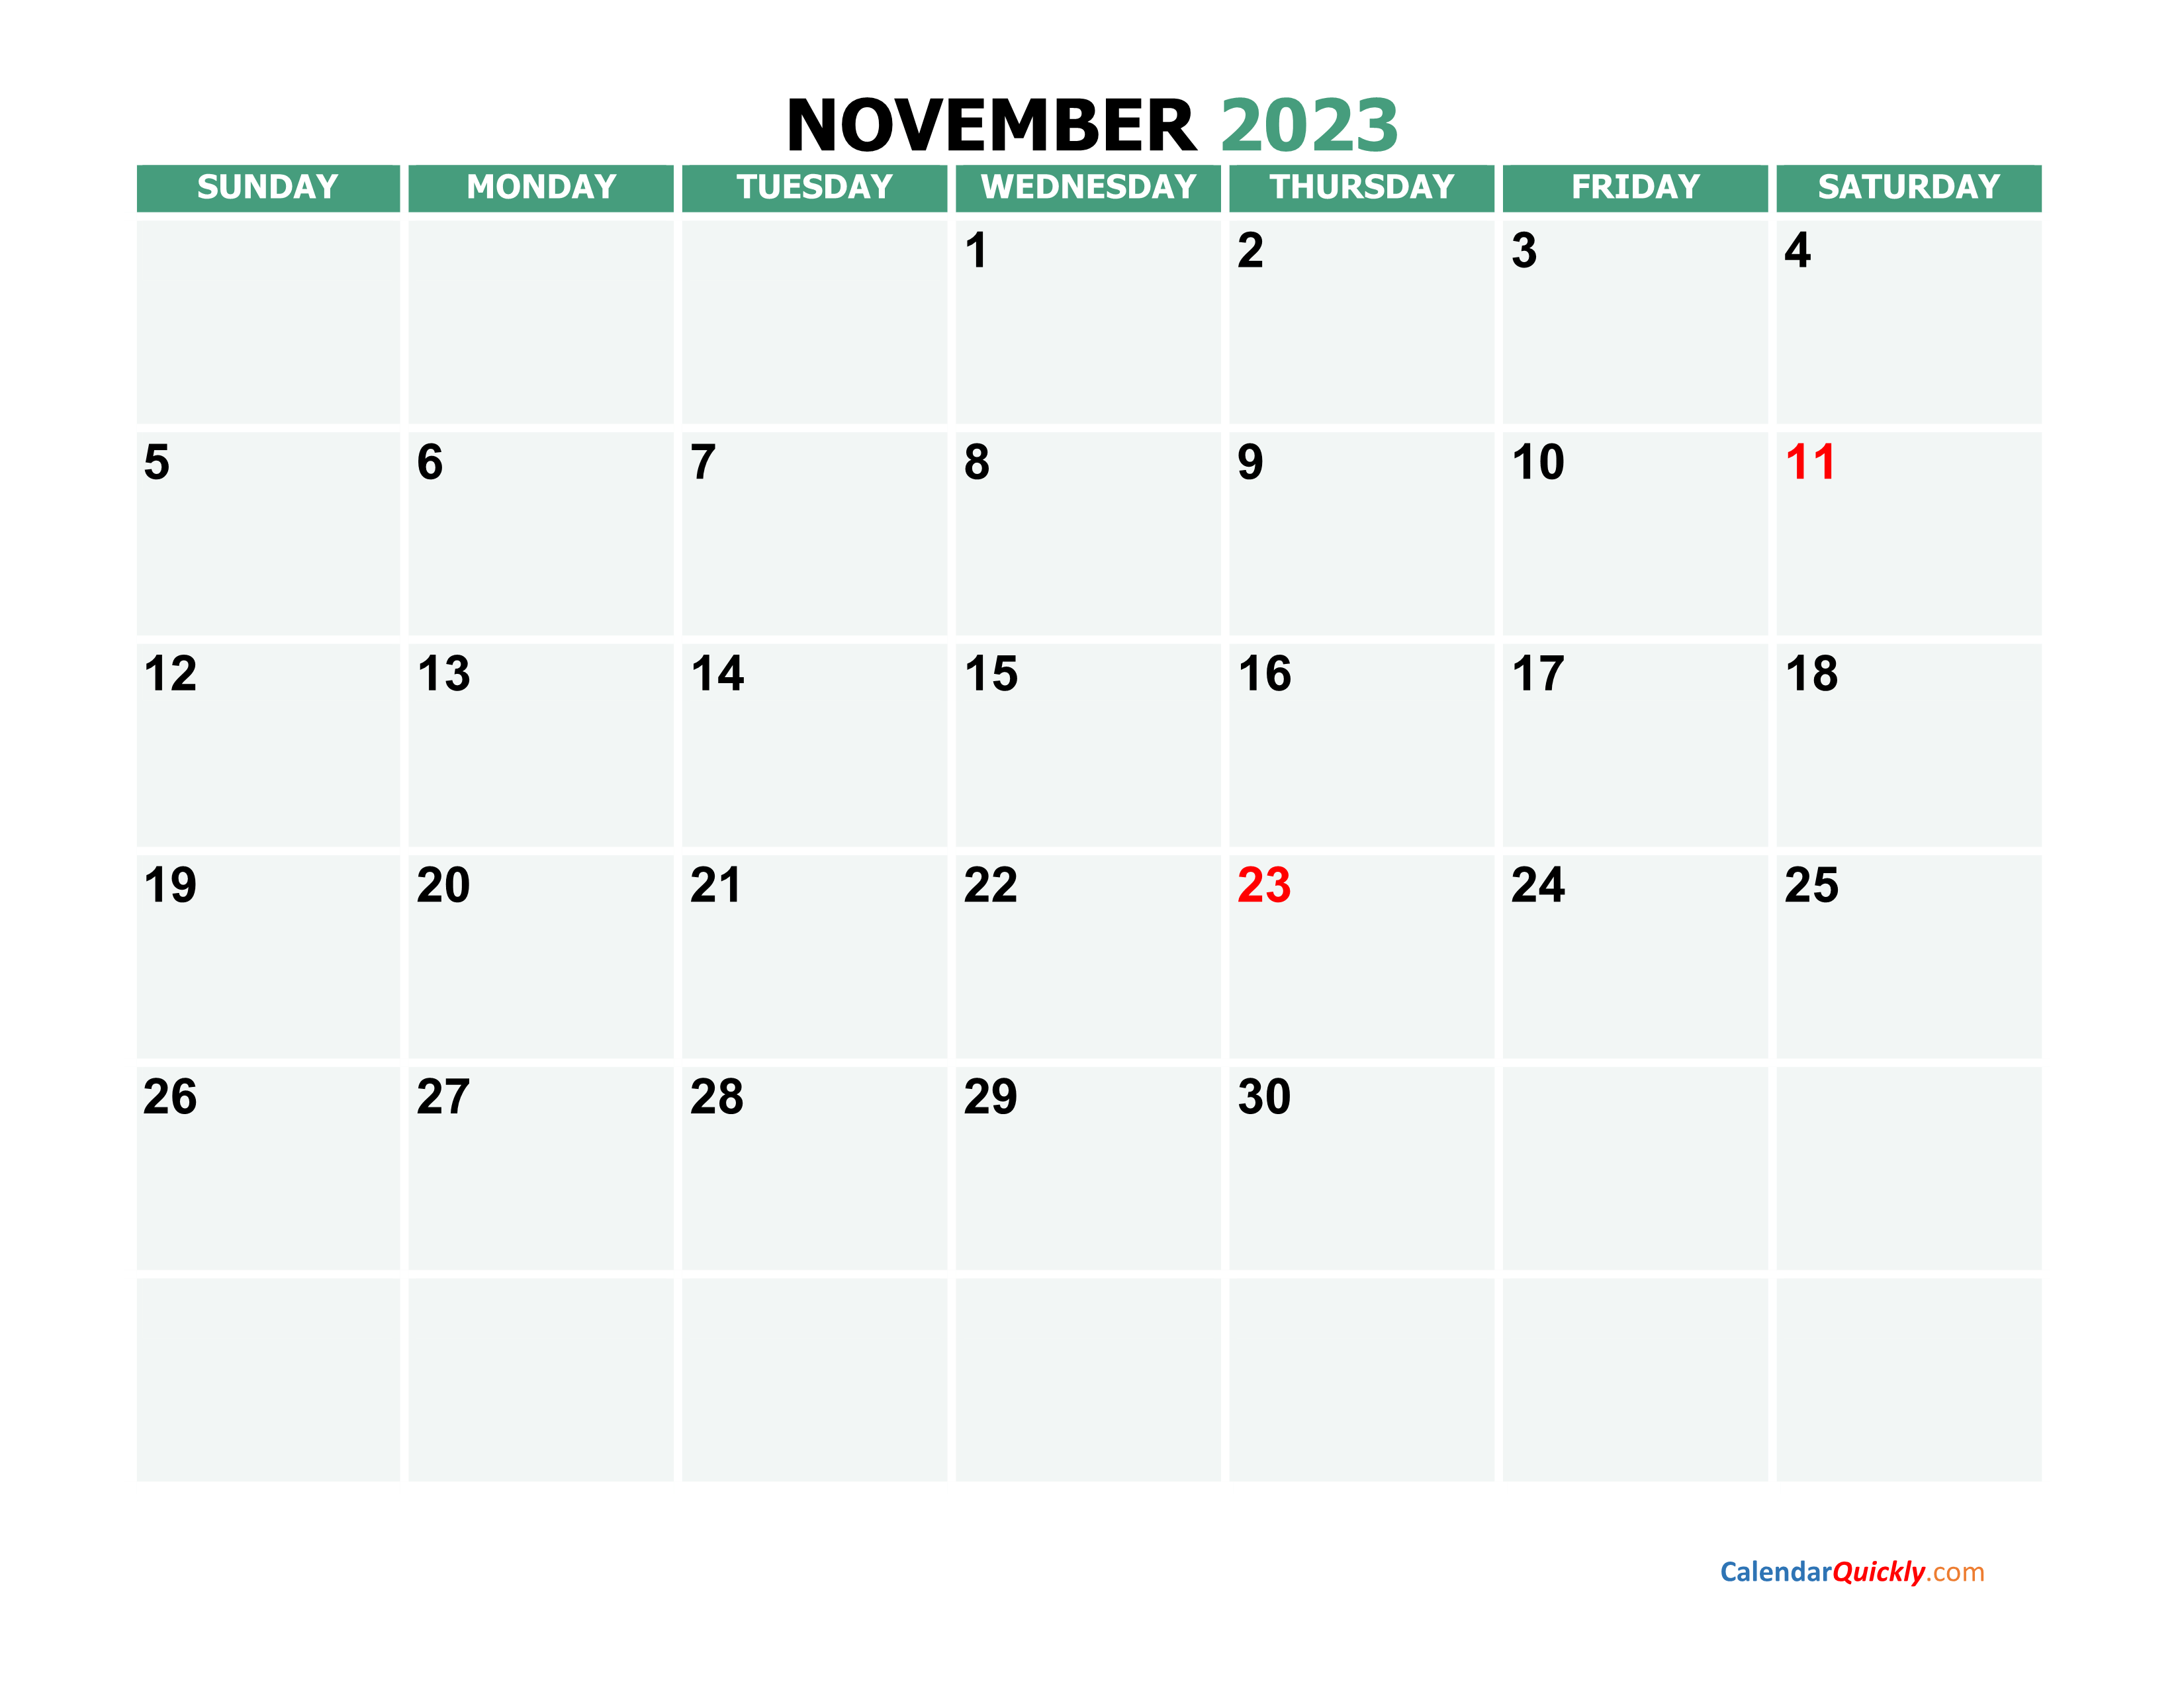 November 2023 Calendar Free Printable Calendar November 2023 Calendar Free Printable Calendar